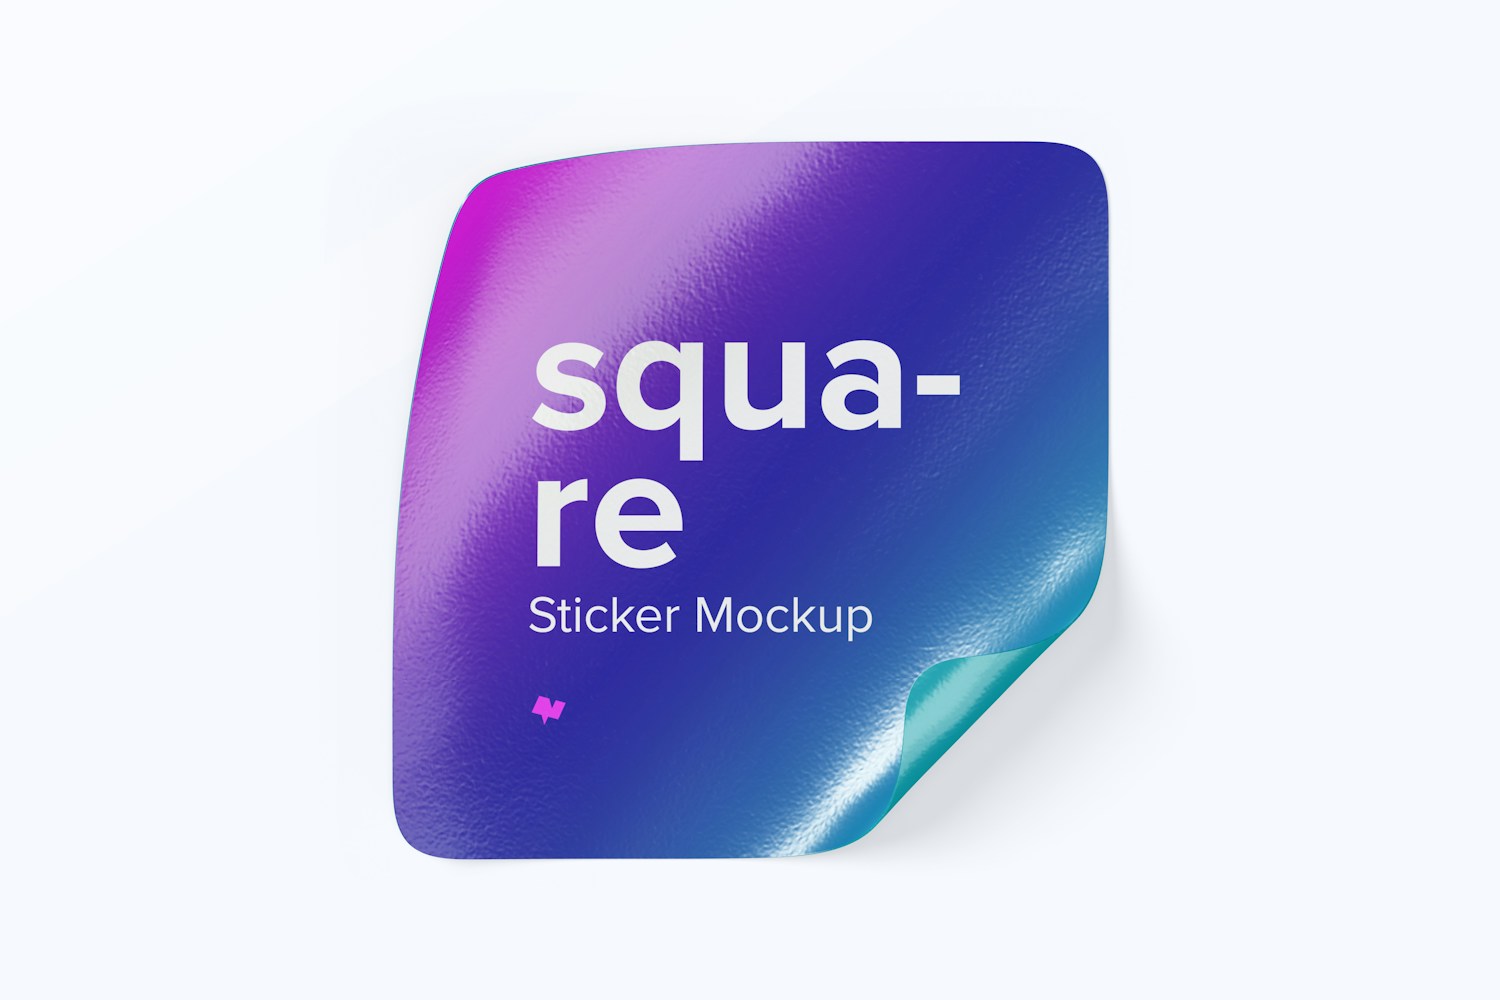 Square Sticker Mockup, Top View 02